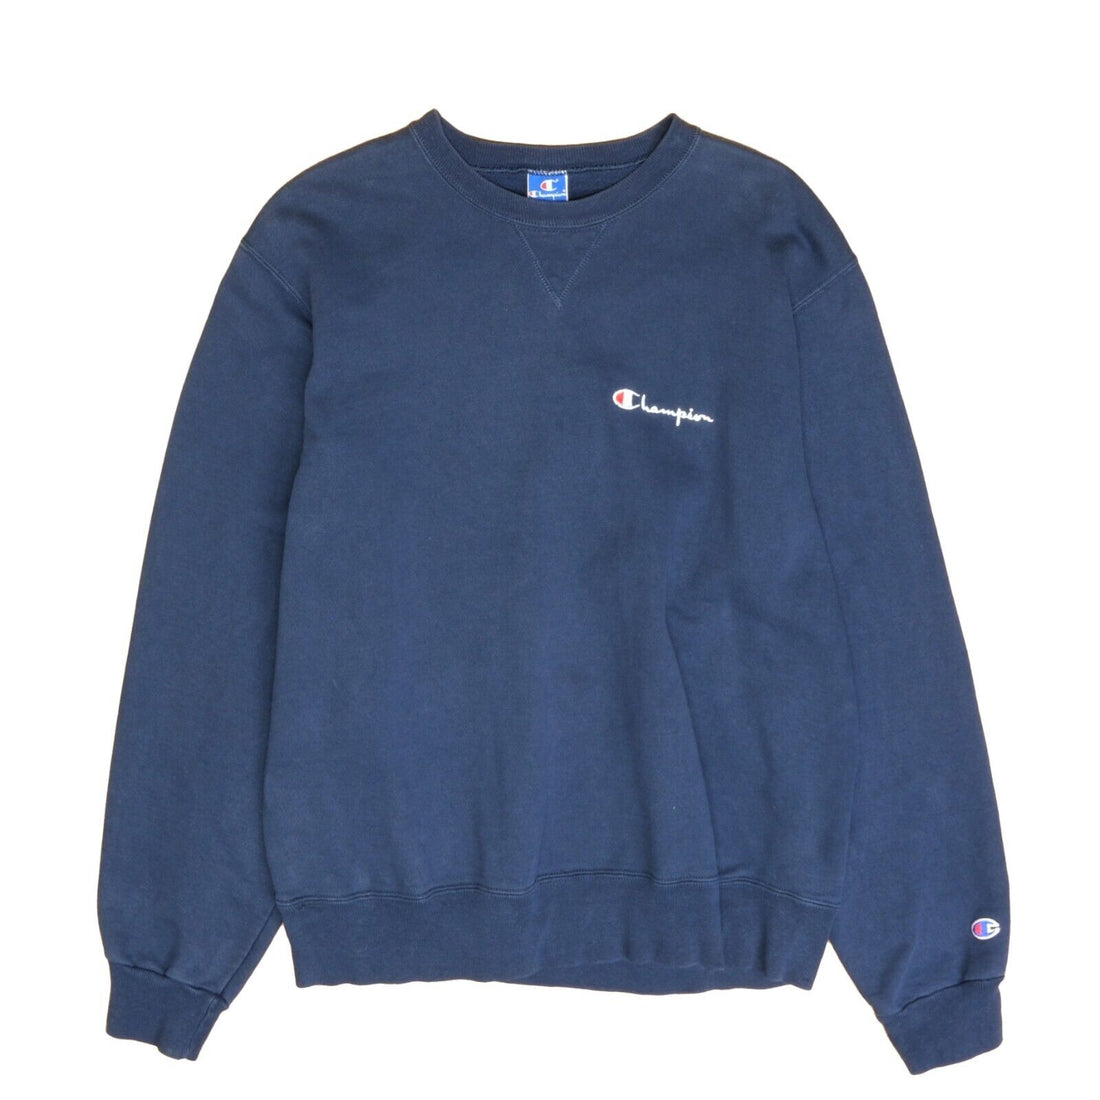 Vintage Champion Sweatshirt Crewneck Size Large Blue 80s